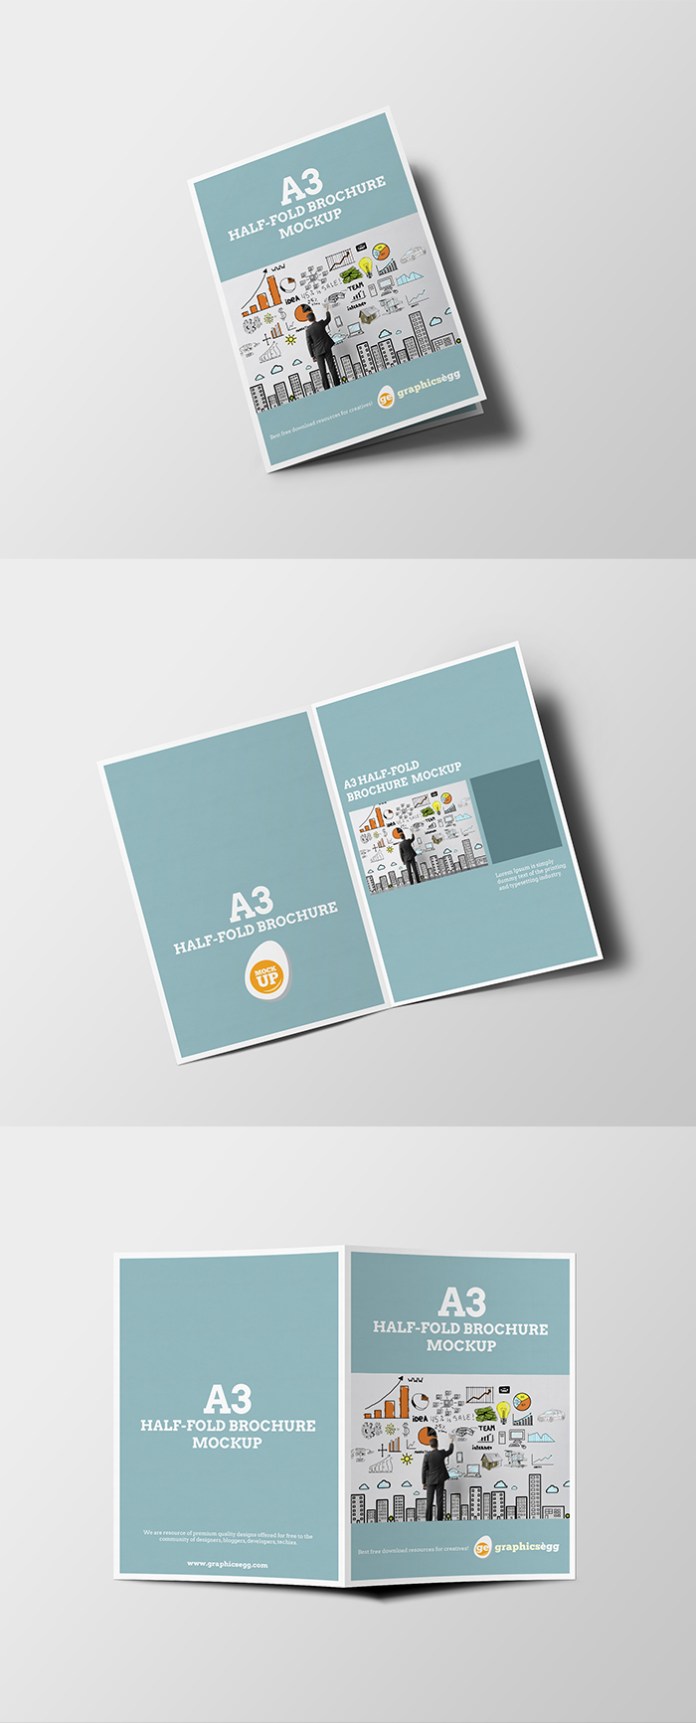 Half-fold Brochure Mockup Free Download